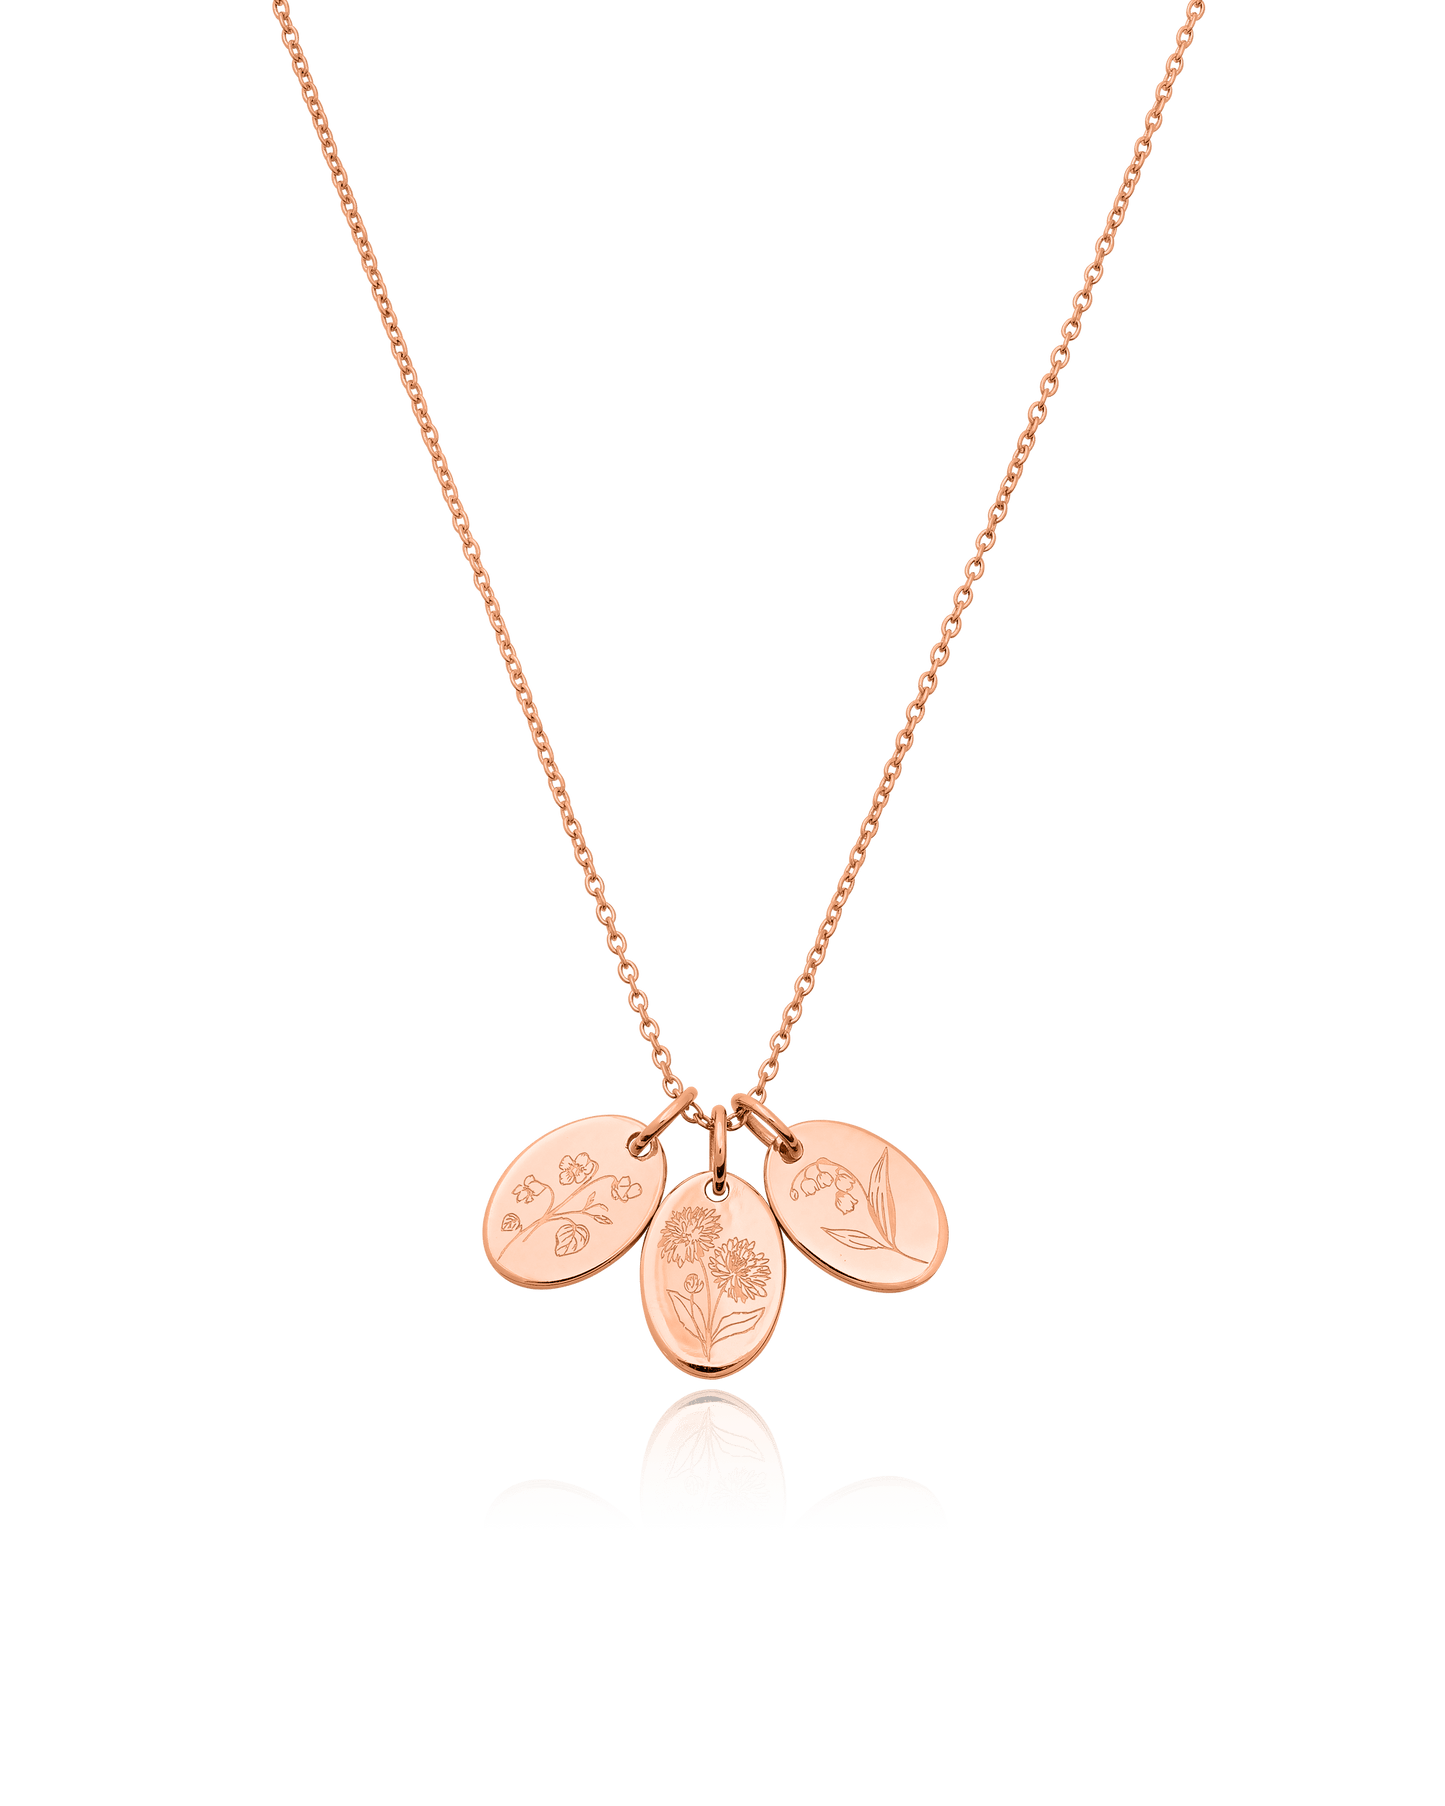 Flower Necklace - 925 Sterling Silver Necklaces magal-dev 